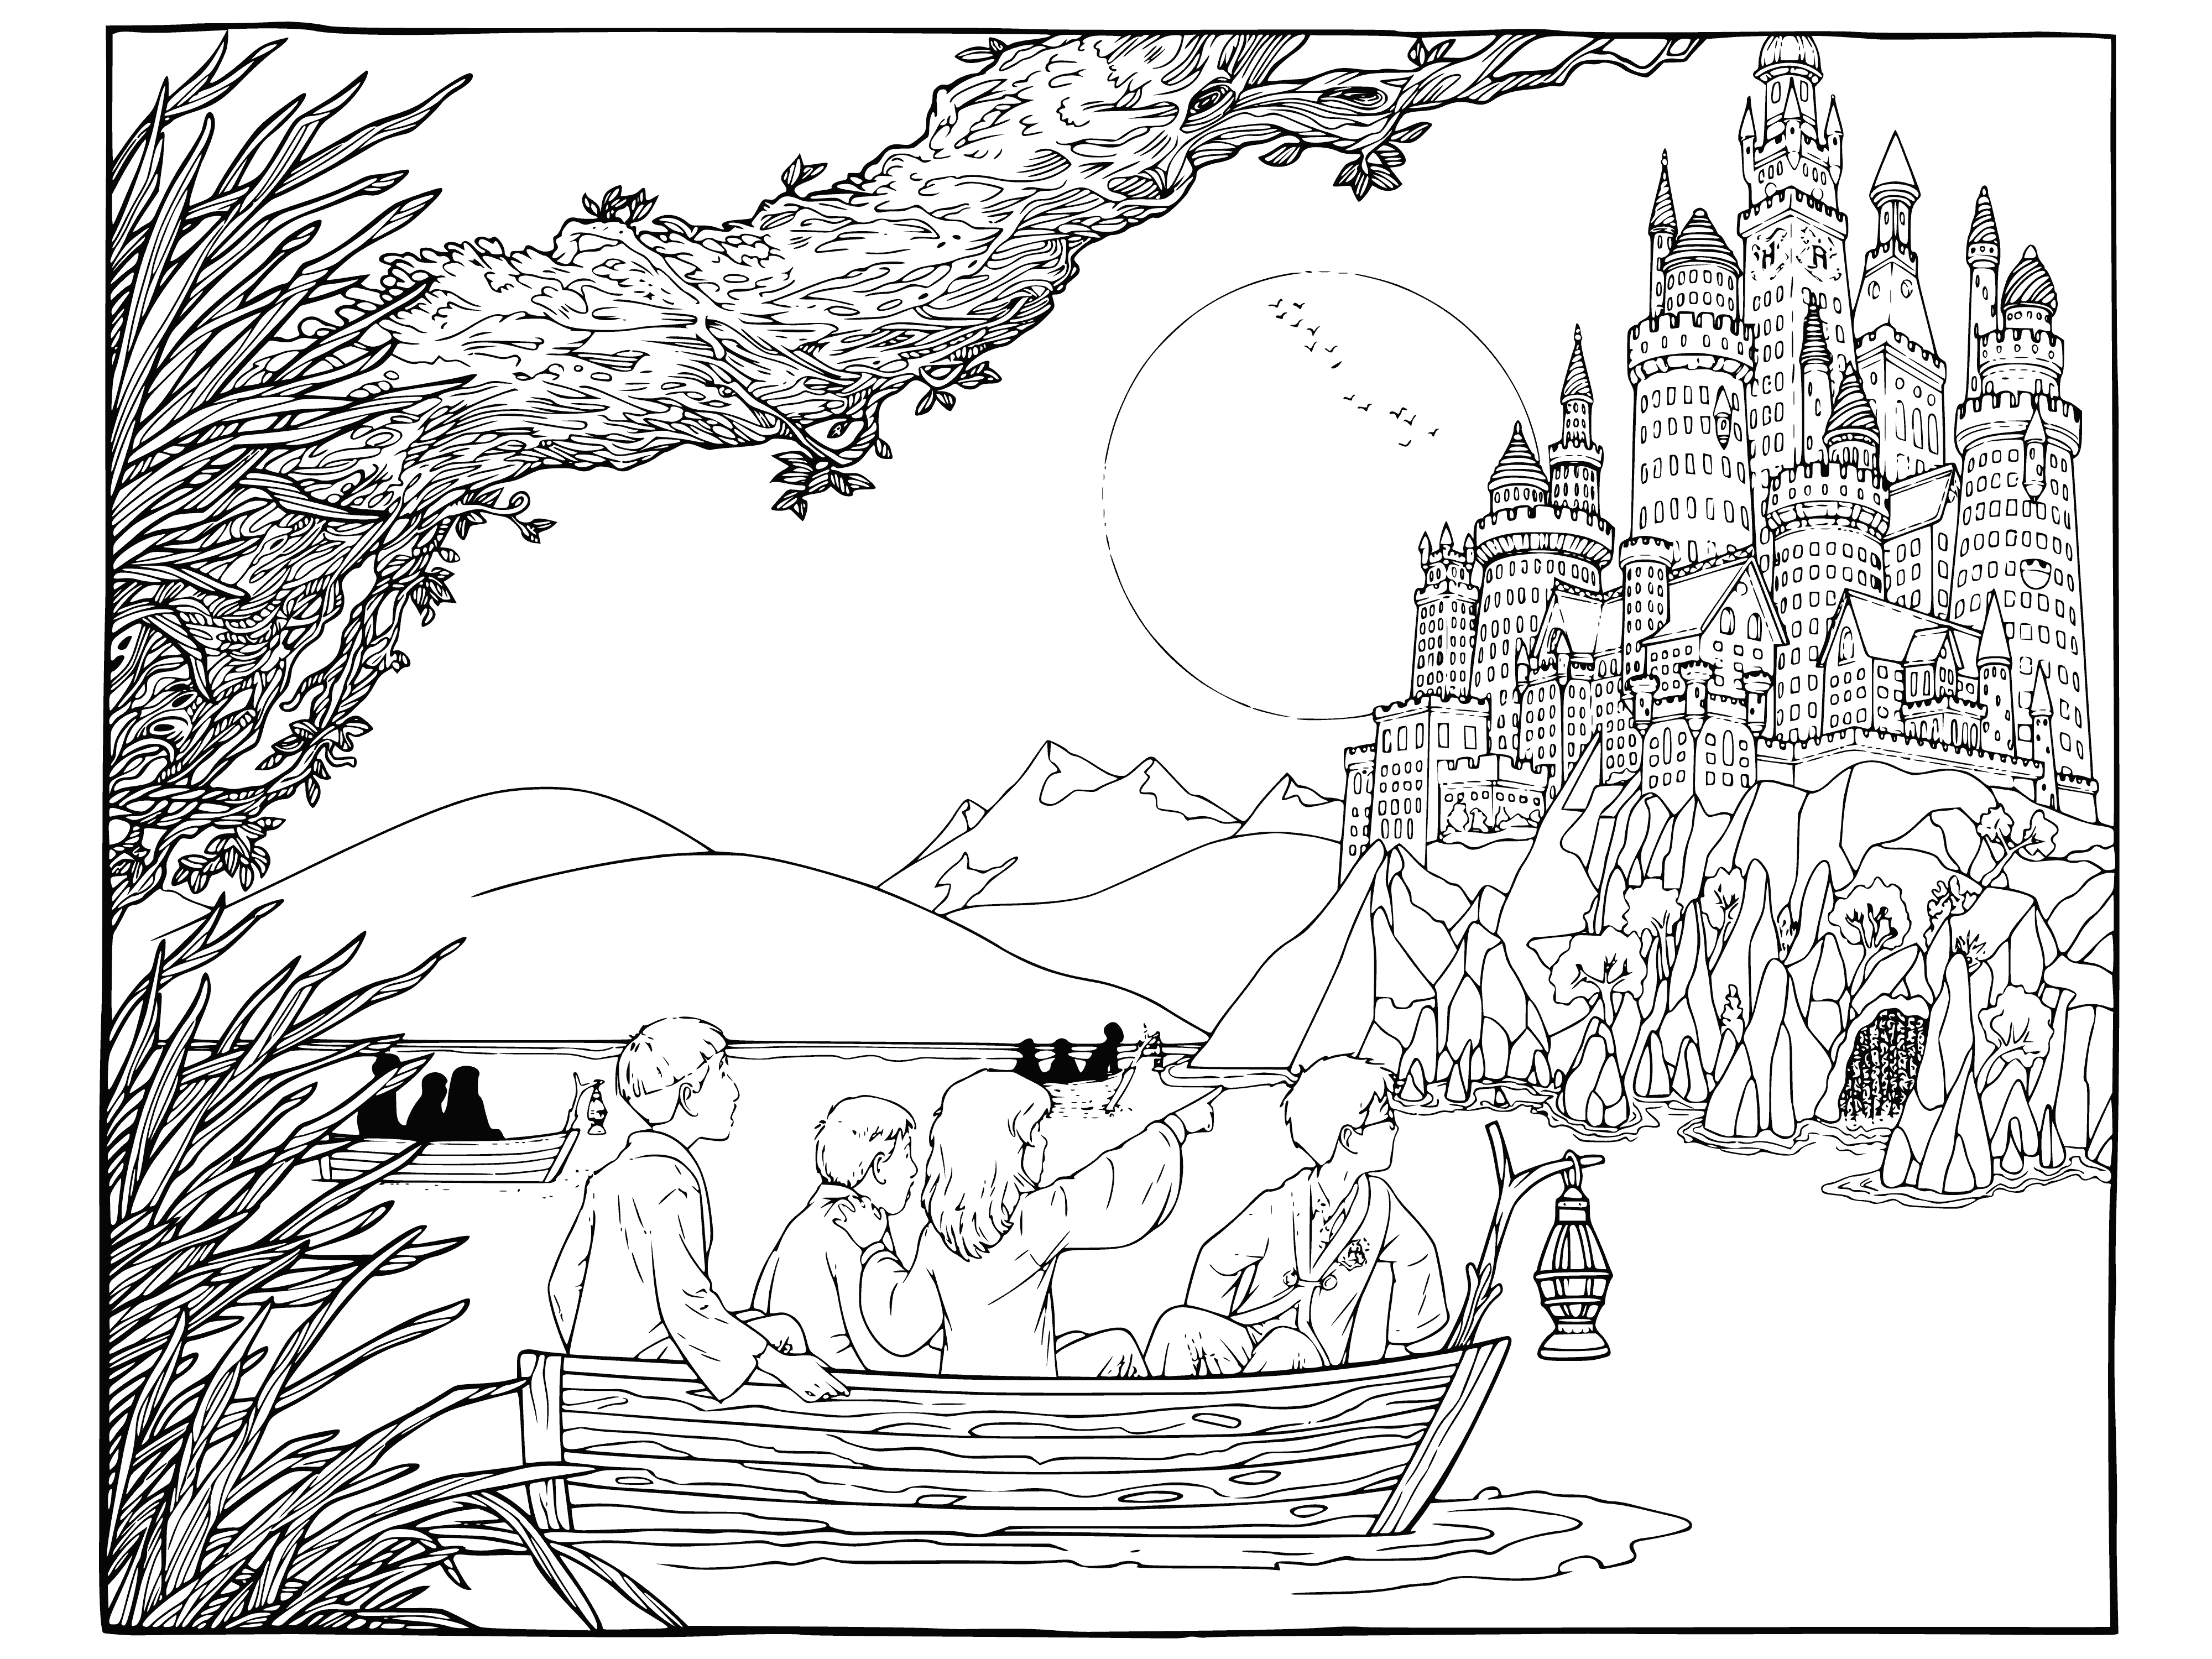 Hogswart School of Wizardry coloring page